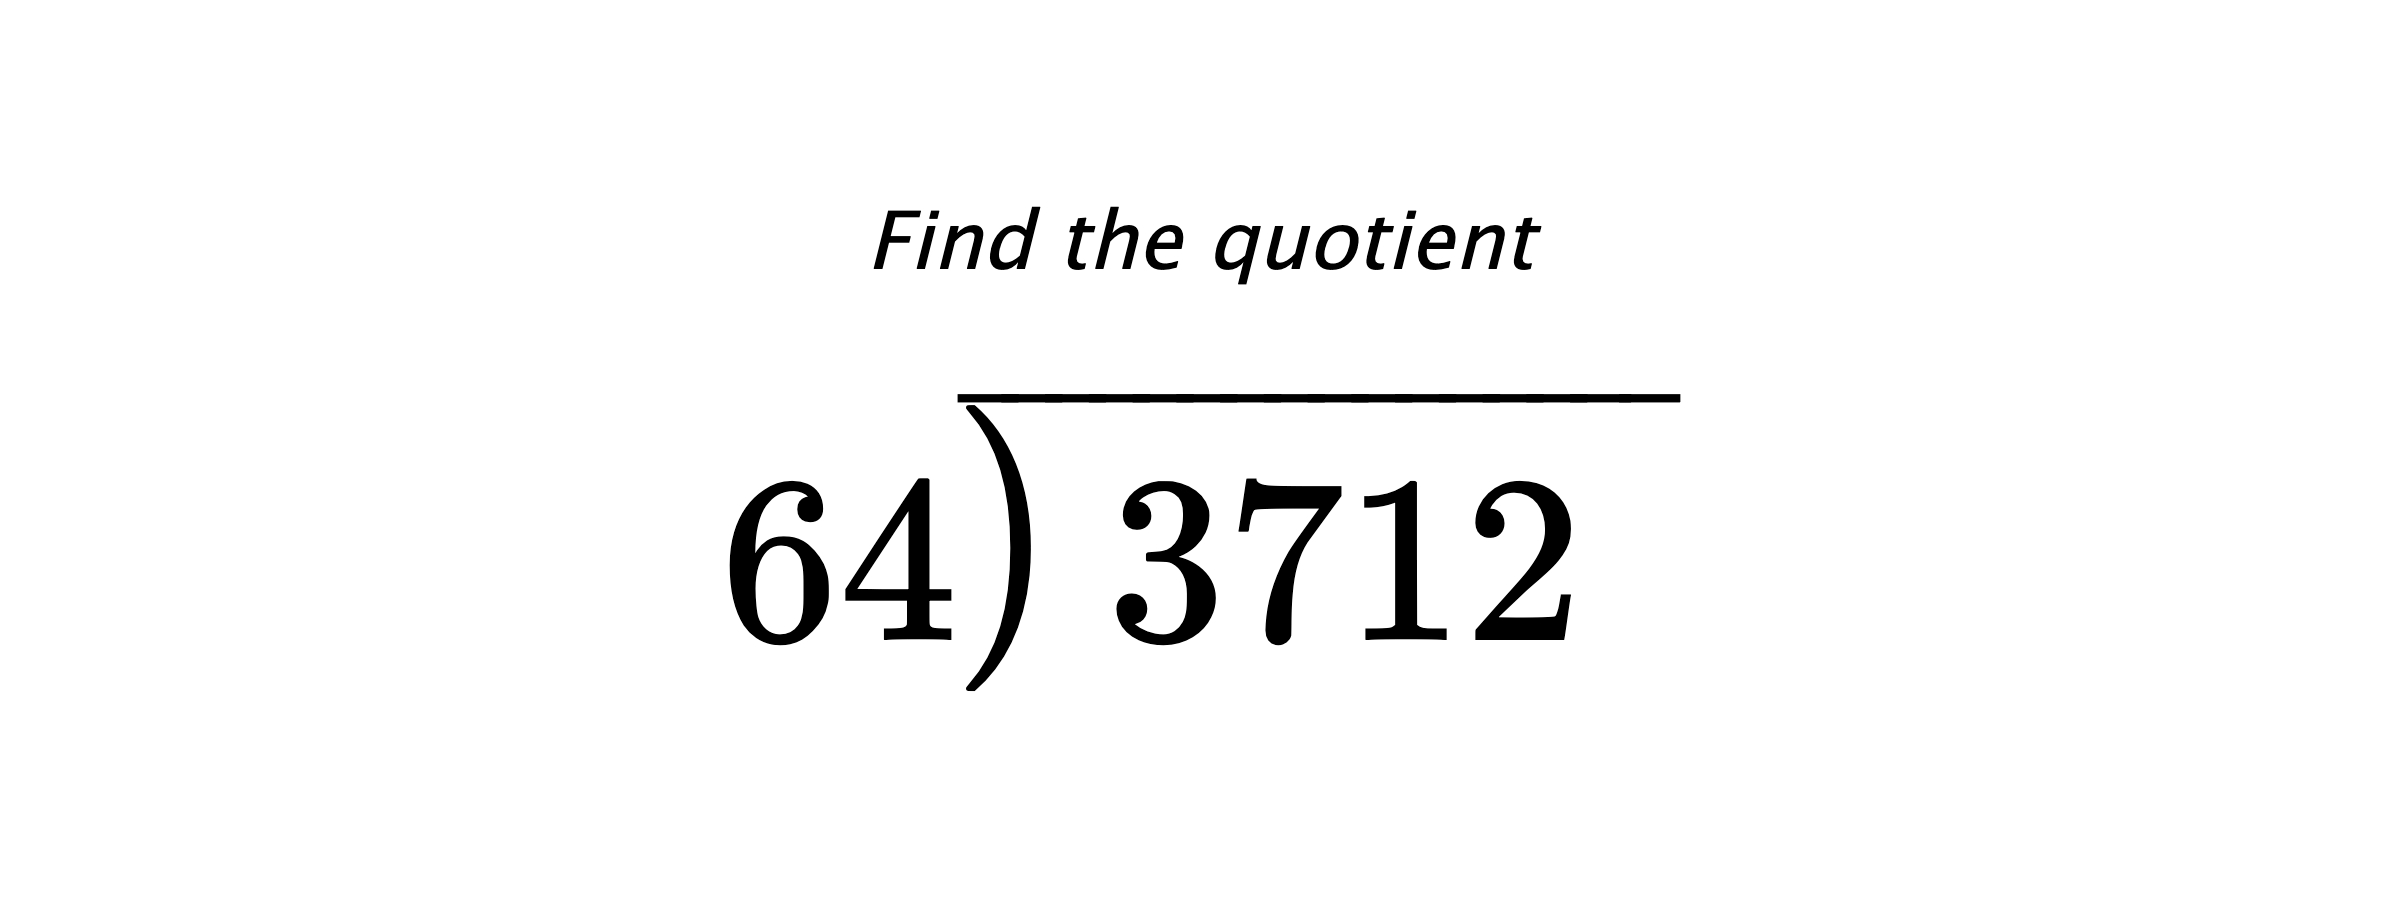 Find the quotient $ 64{\overline{\smash{\raise.3ex\hbox{$\big)$}}\,3712\phantom{)}}} $